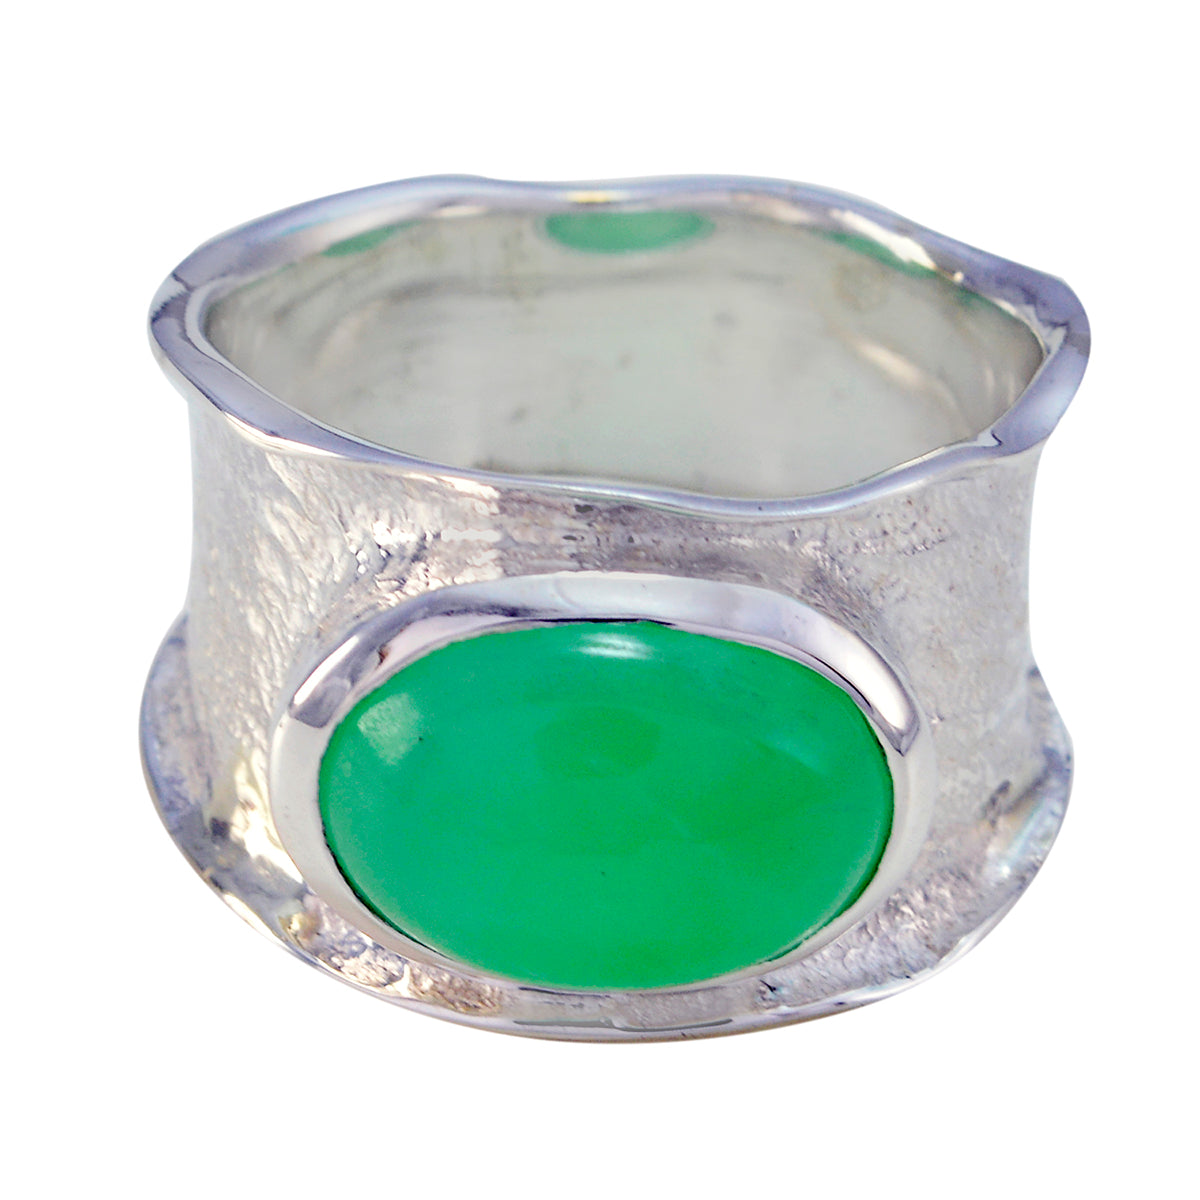 Riyo Inviting Gemstone Green Onyx Solid Silver Rings Jewelry Bails